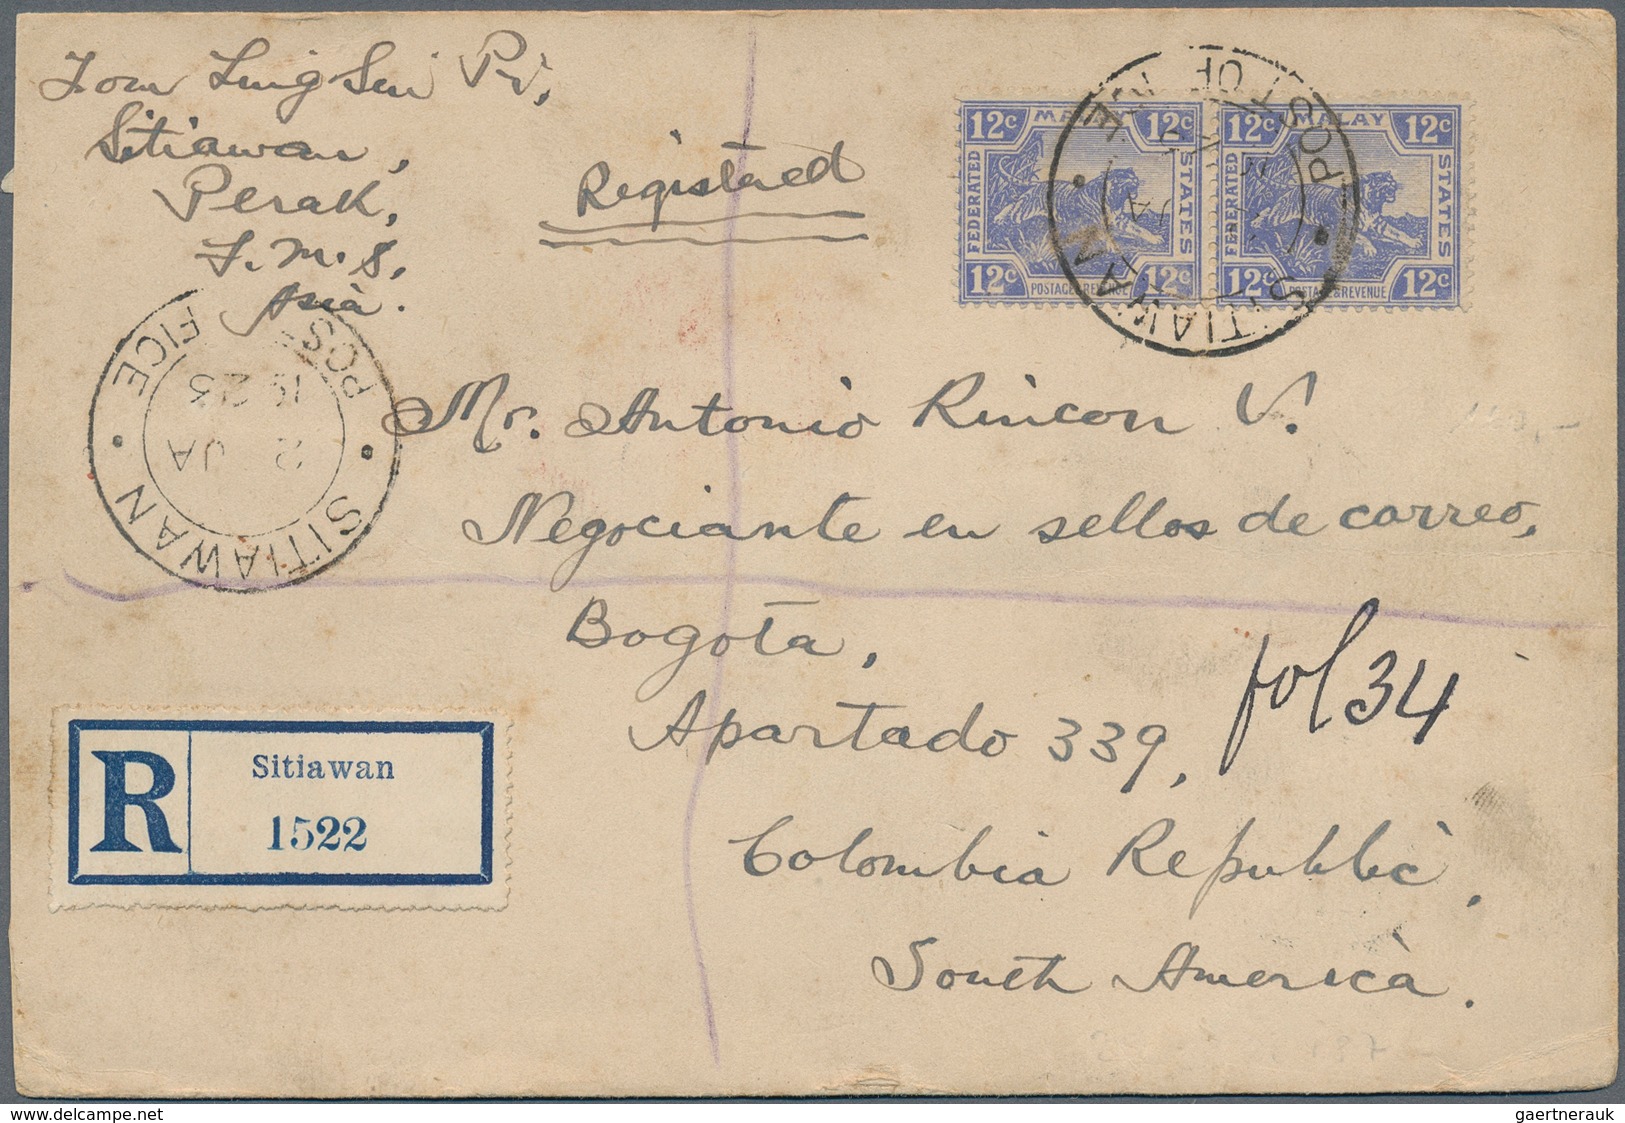 Malaiische Staaten - Perak: 1923 Destination COLOMBIA: Registered Cover From Sitiawan, Perak To Bogo - Perak